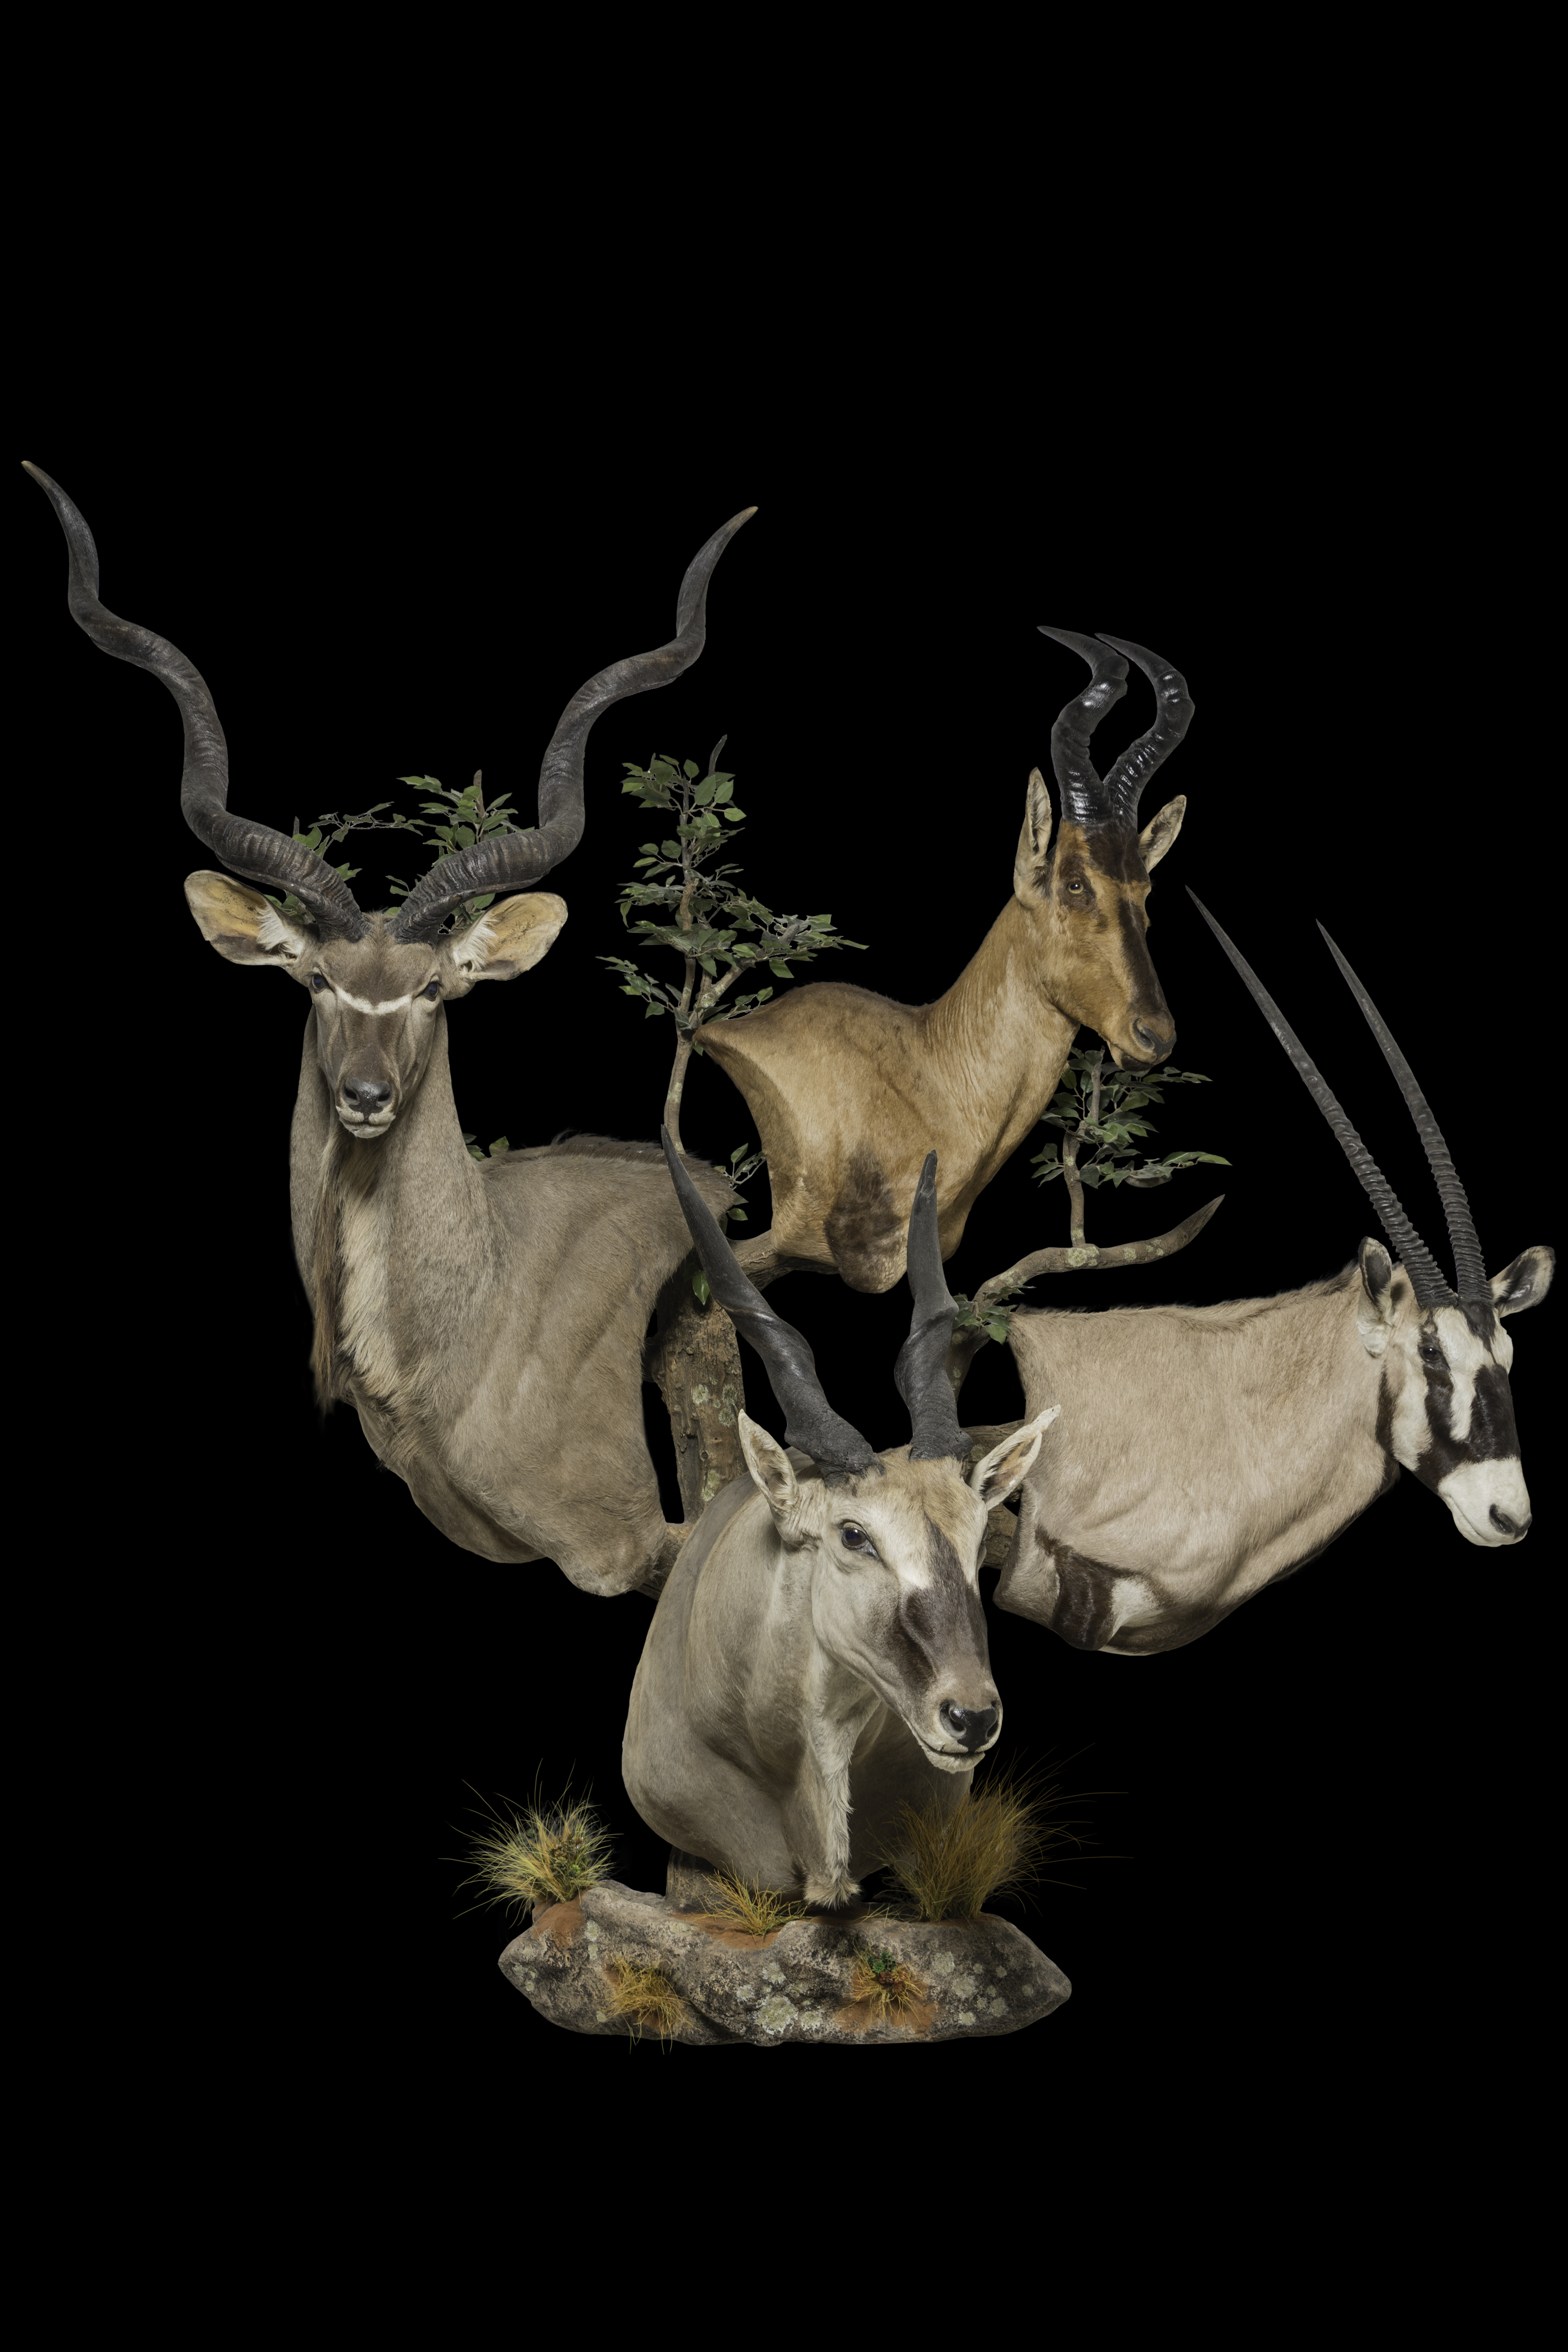 kudu-red-hartebeest-gemsbuck-eland-pedestalmount-custom-ff-418-jpg.464864